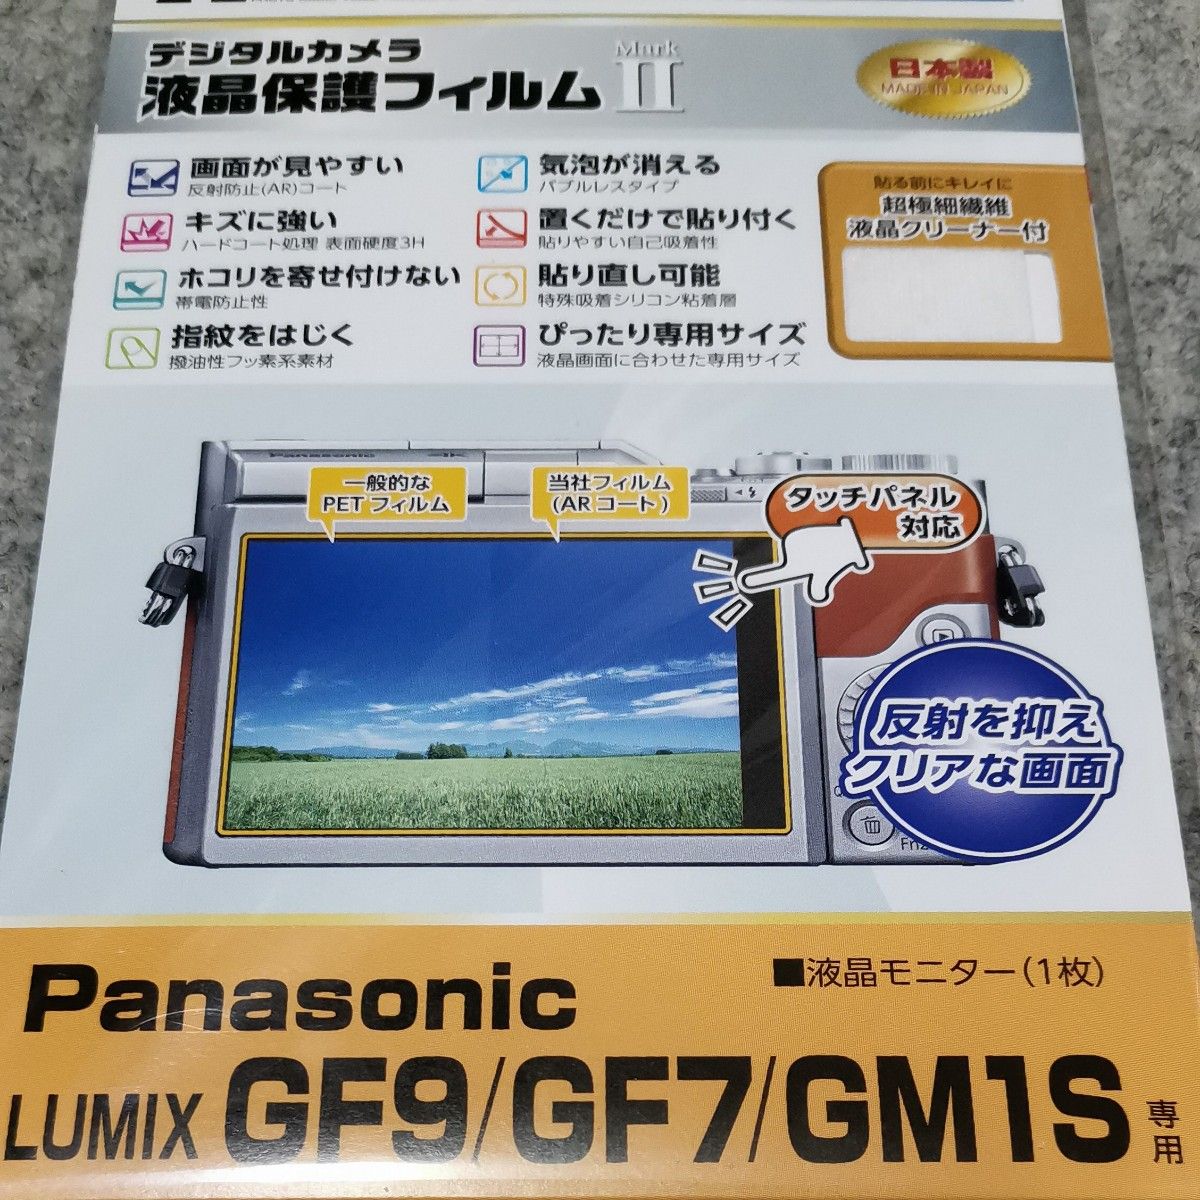 HAKUBA デジタルカメラ液晶保護フィルム Panasonic LUMIX GF9/GF7/GM1S専用 DGF2-PAGF9